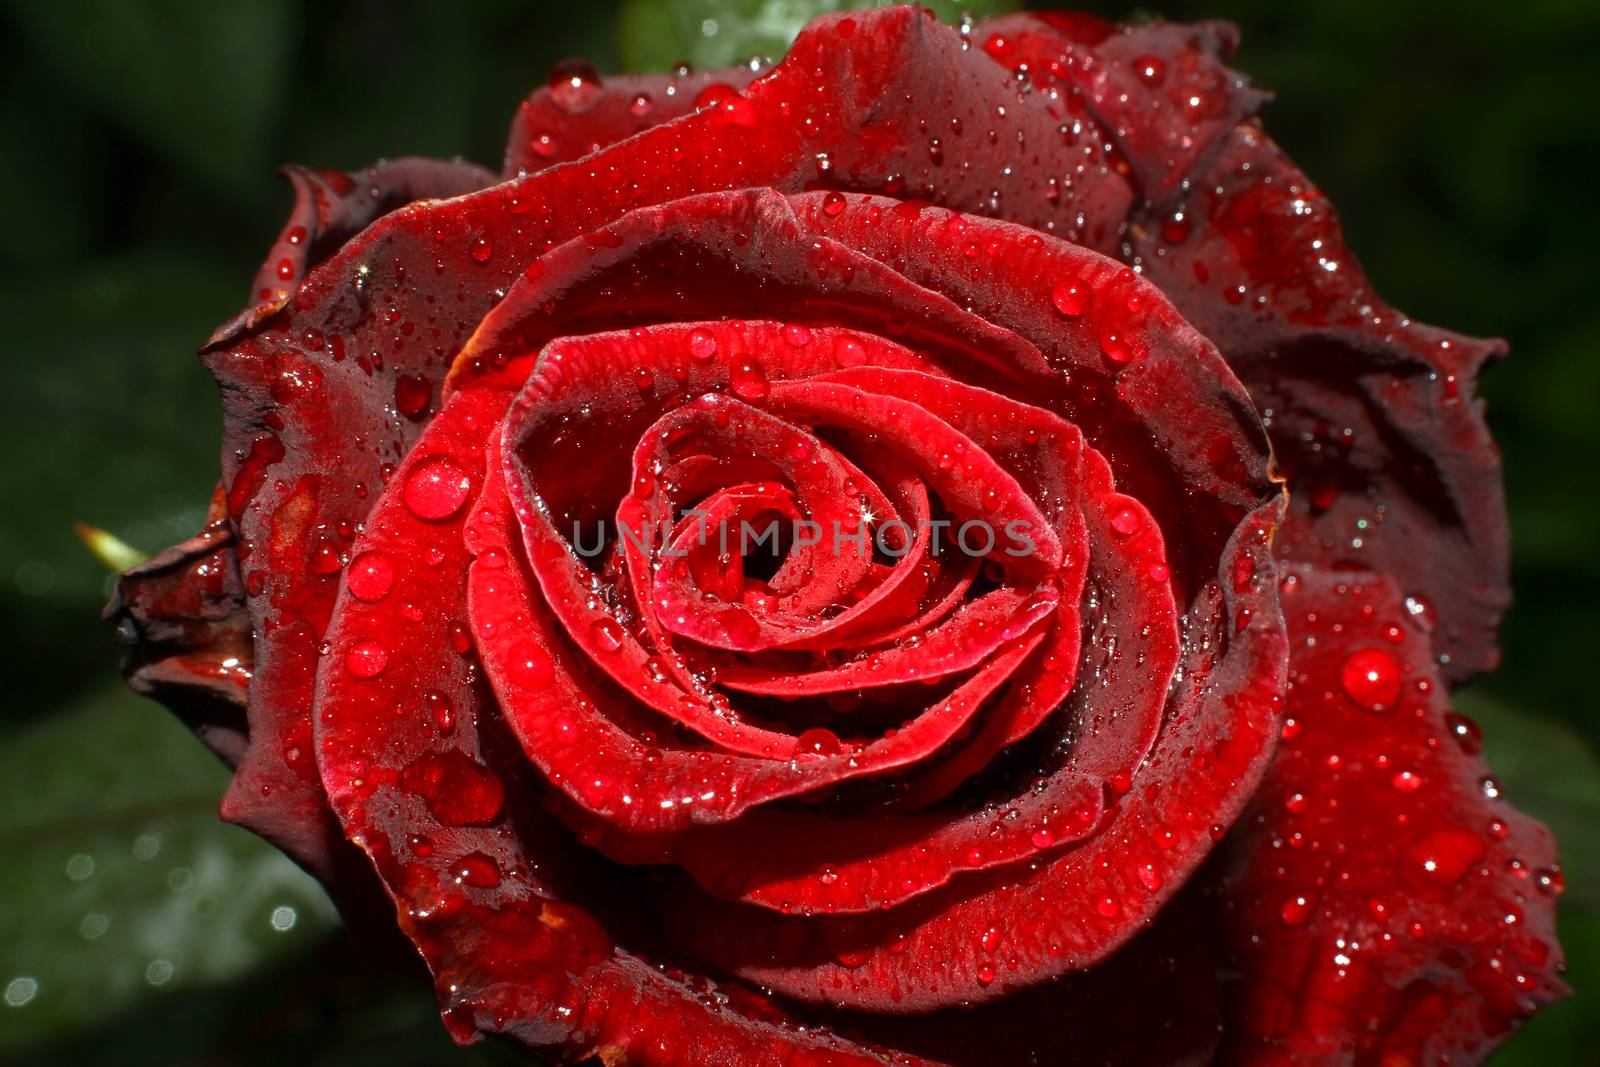 rose rain drops in the garden by alex_nako